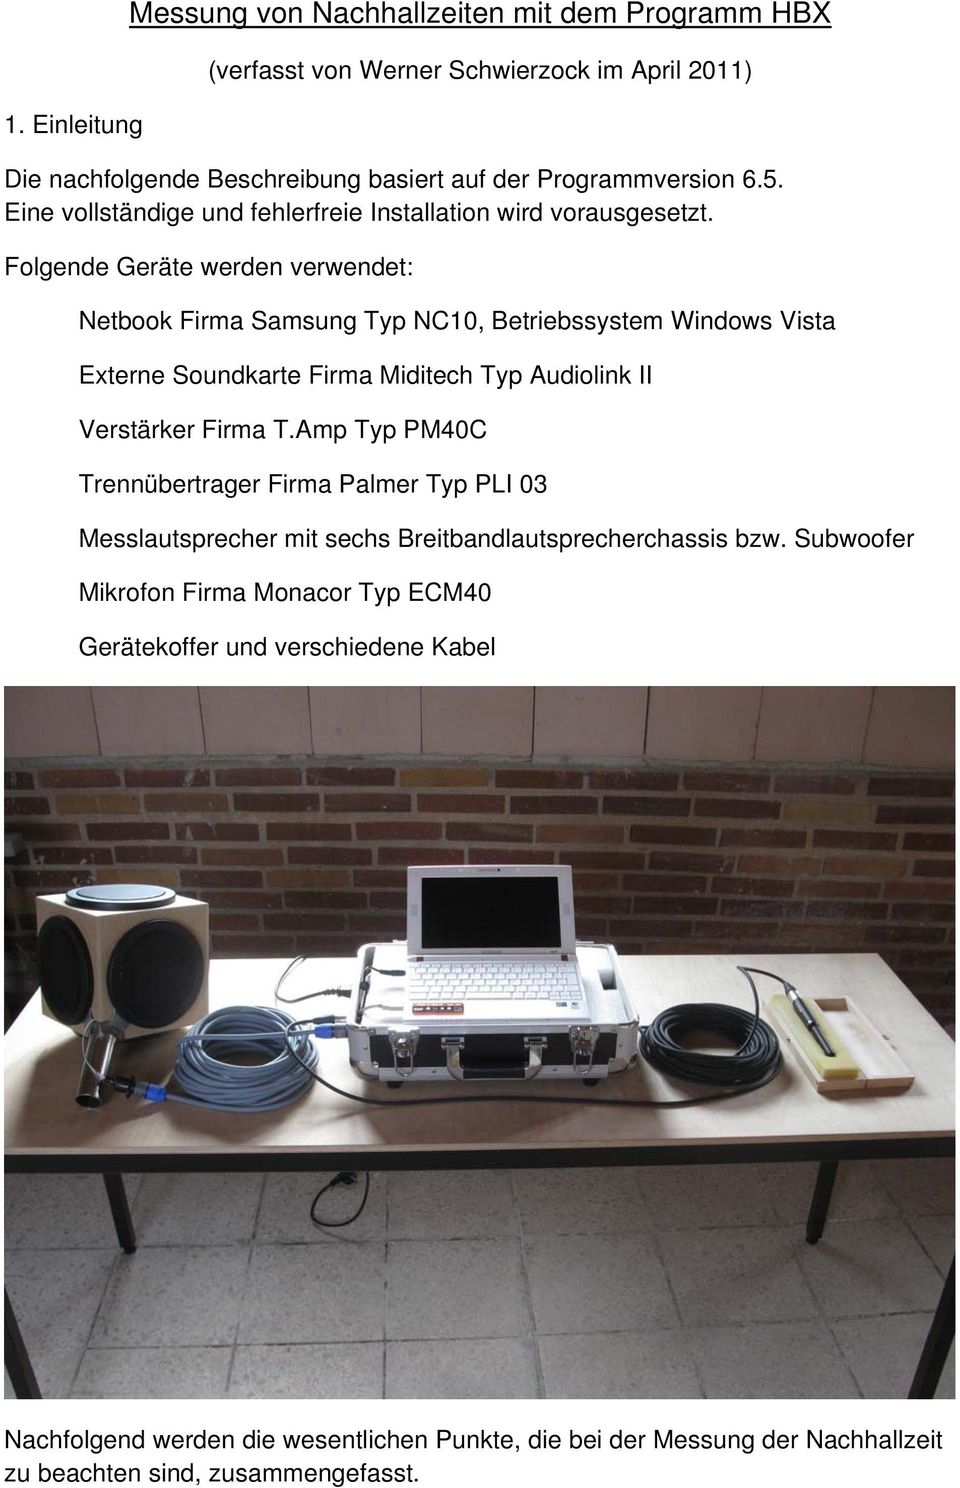 Folgende Geräte werden verwendet: Netbook Firma Samsung Typ NC10, Betriebssystem Windows Vista Externe Soundkarte Firma Miditech Typ Audiolink II Verstärker Firma T.